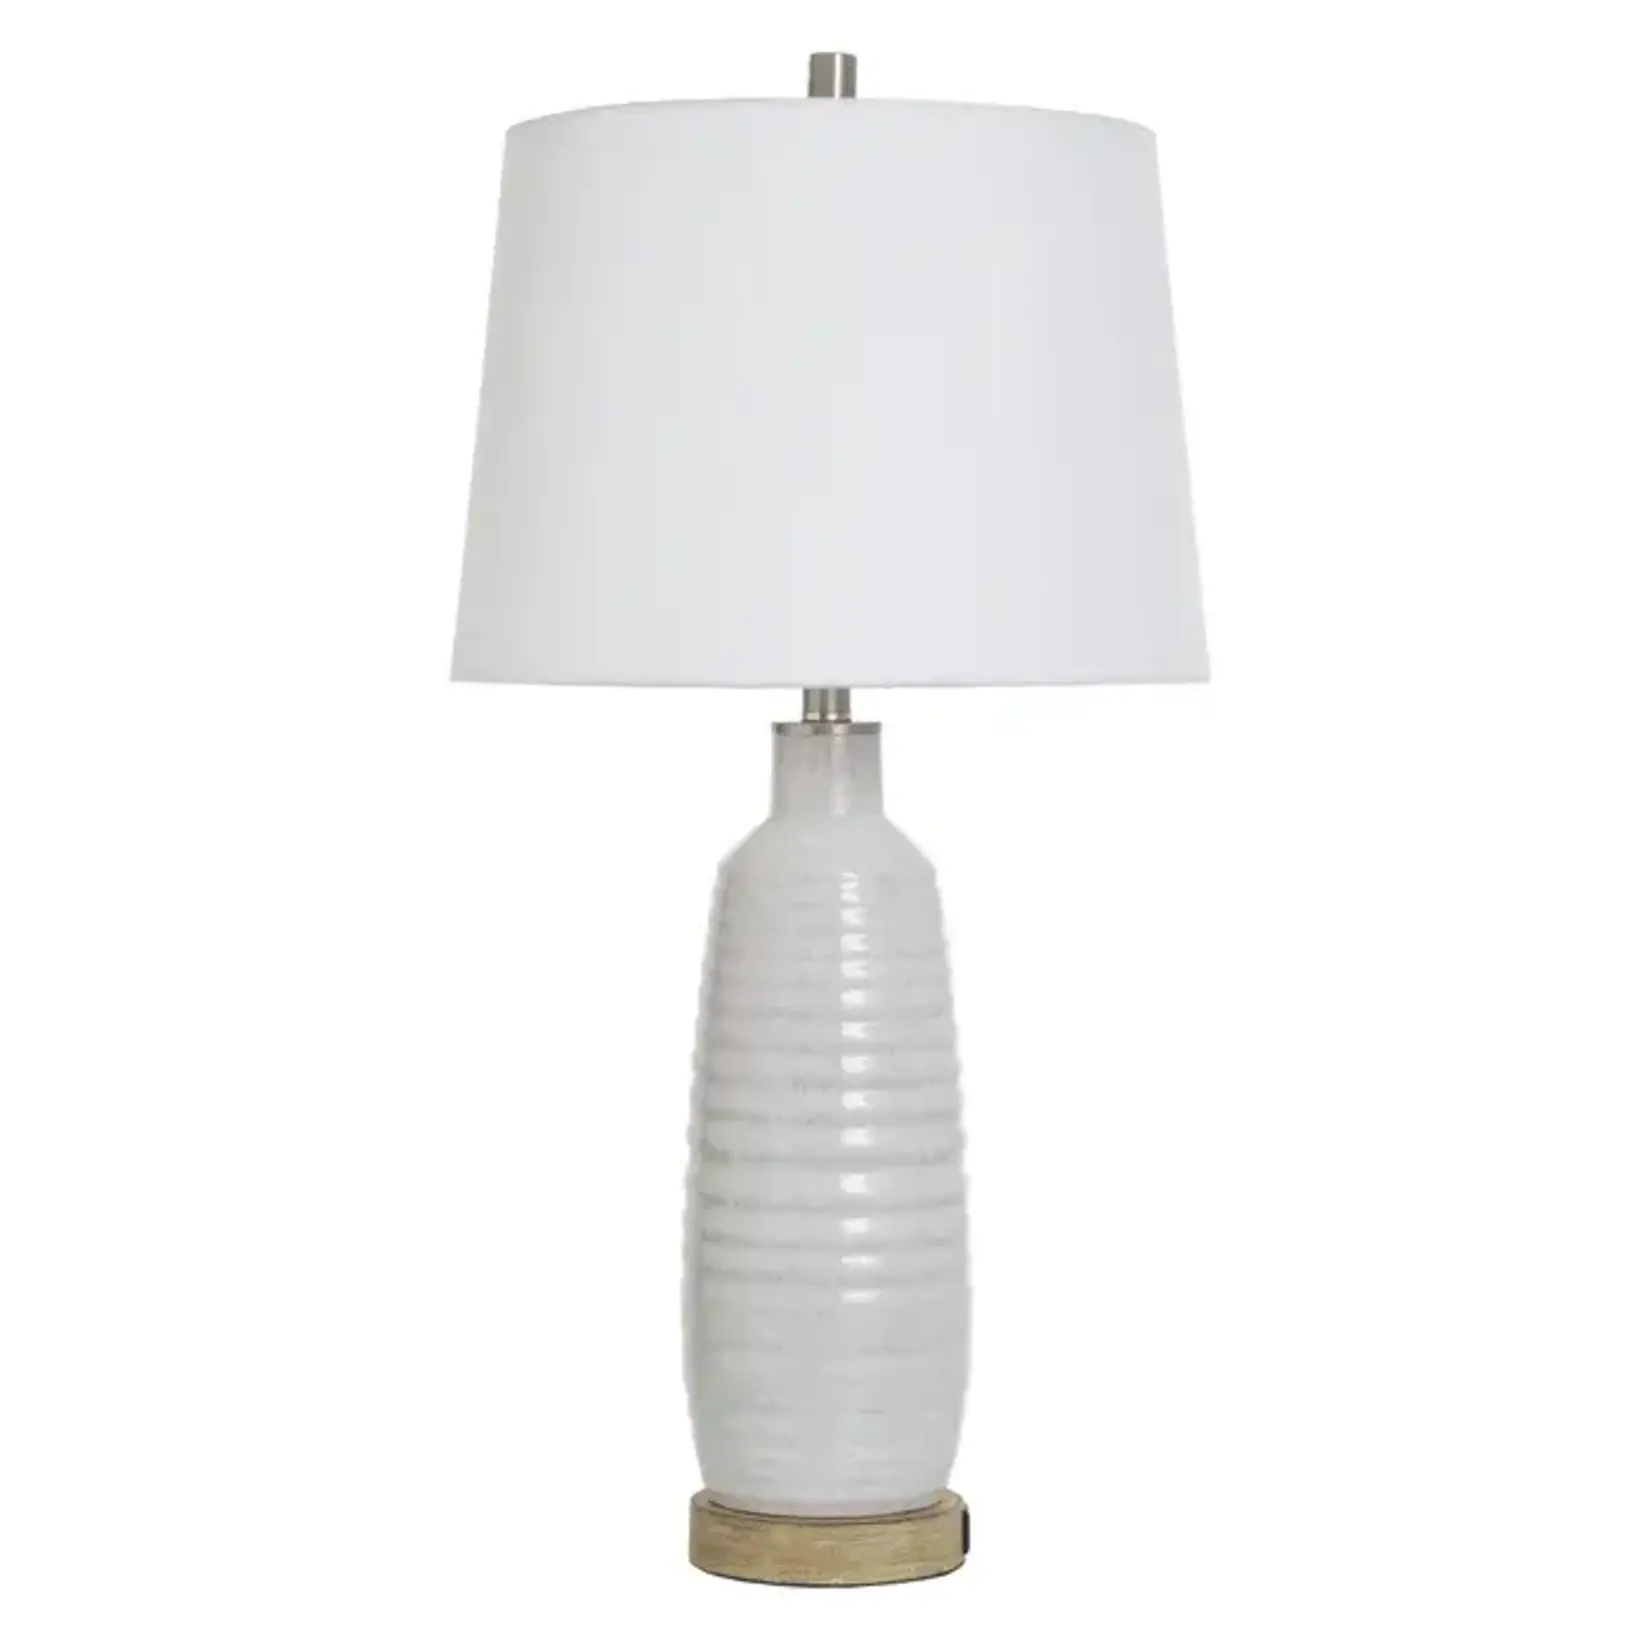 Stylecraft Lamp KHL334188